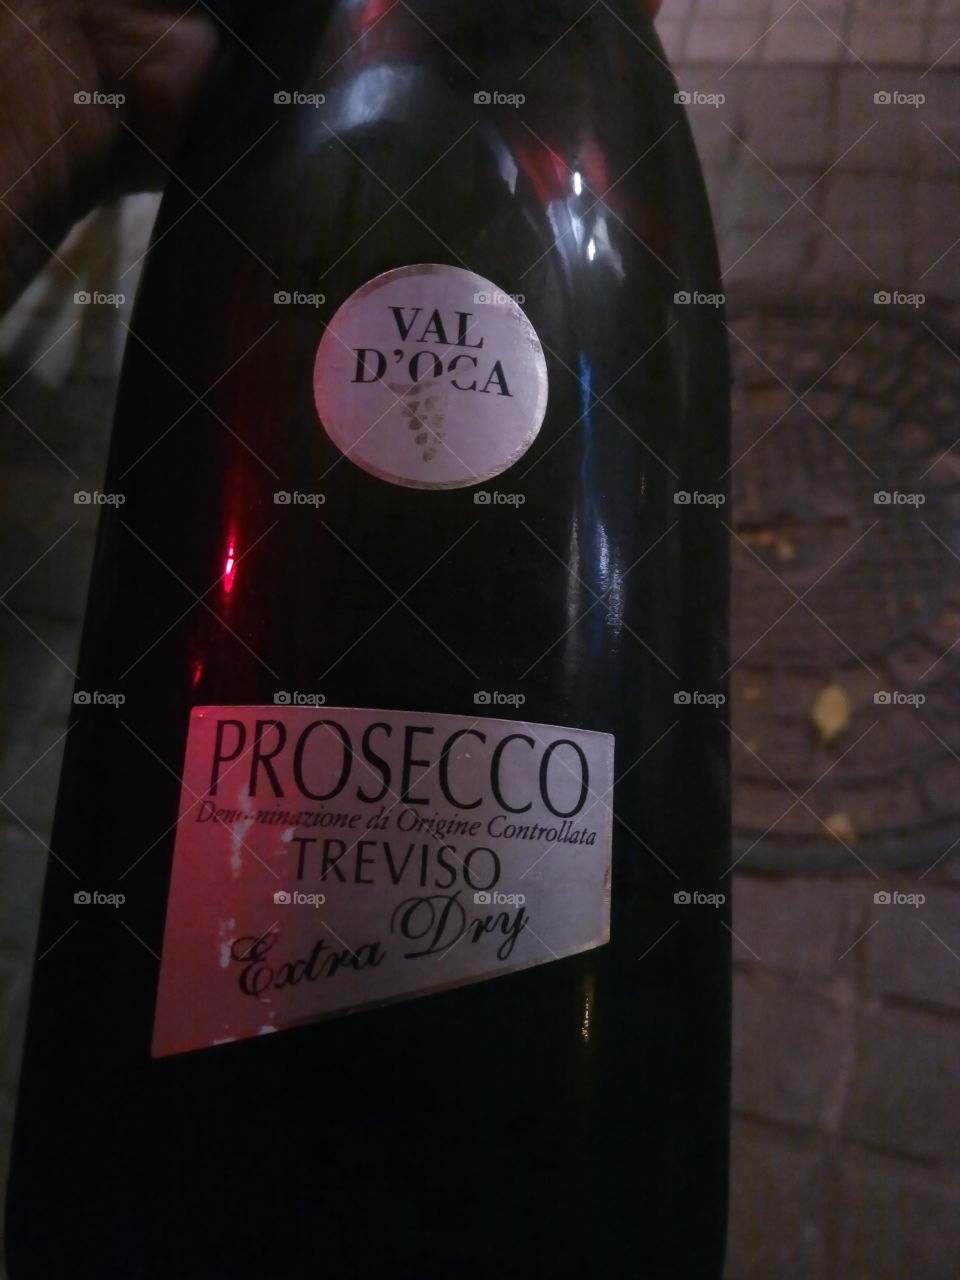 Prosecco bottle